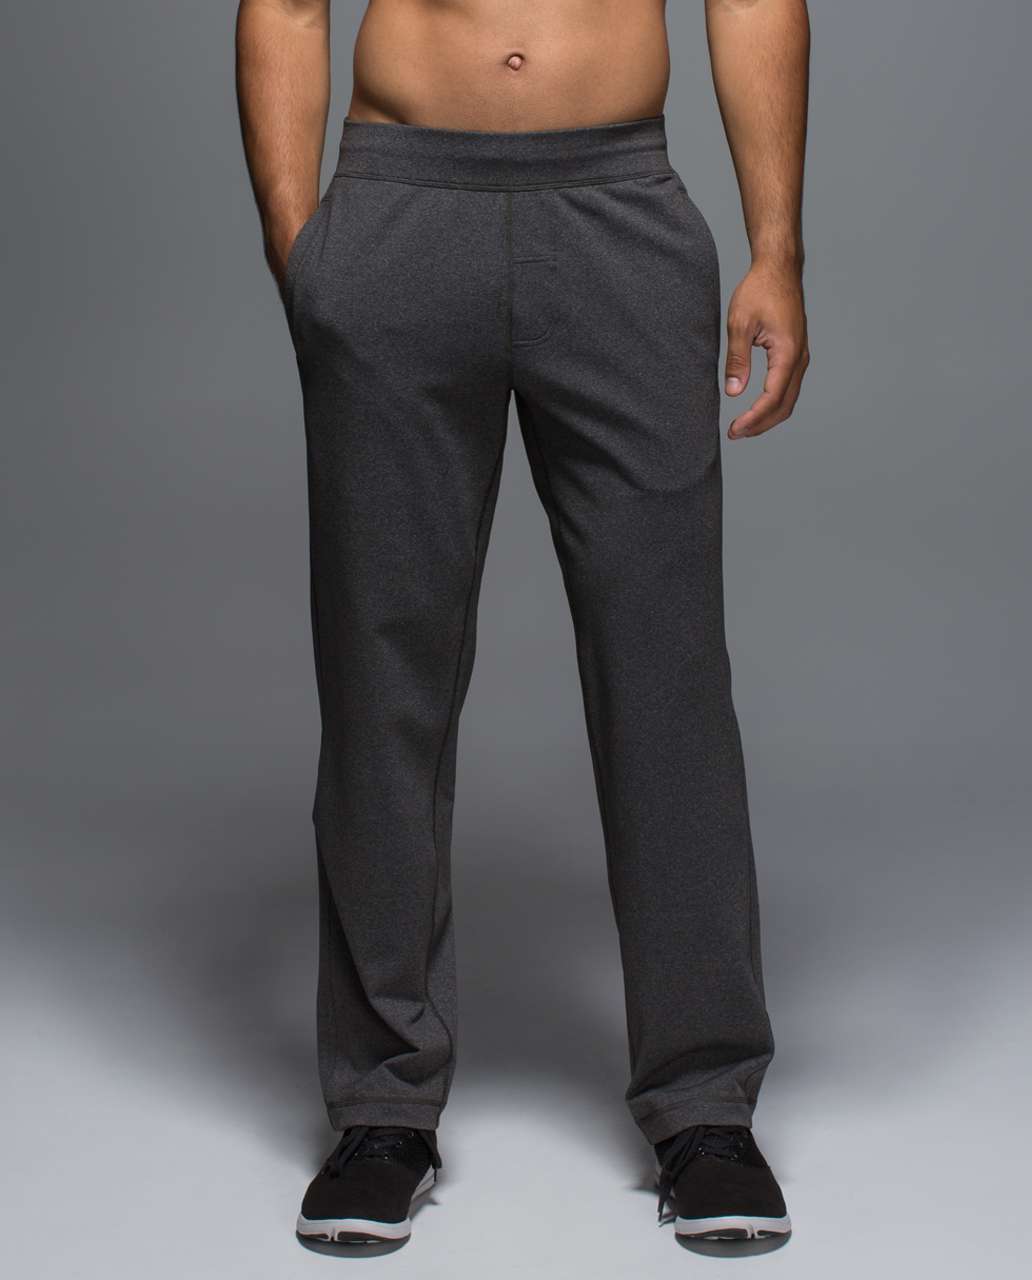 New Black Cotton Casual Tai Chi Kung Fu Pants Martial Arts Wing Chun  Trousers | eBay